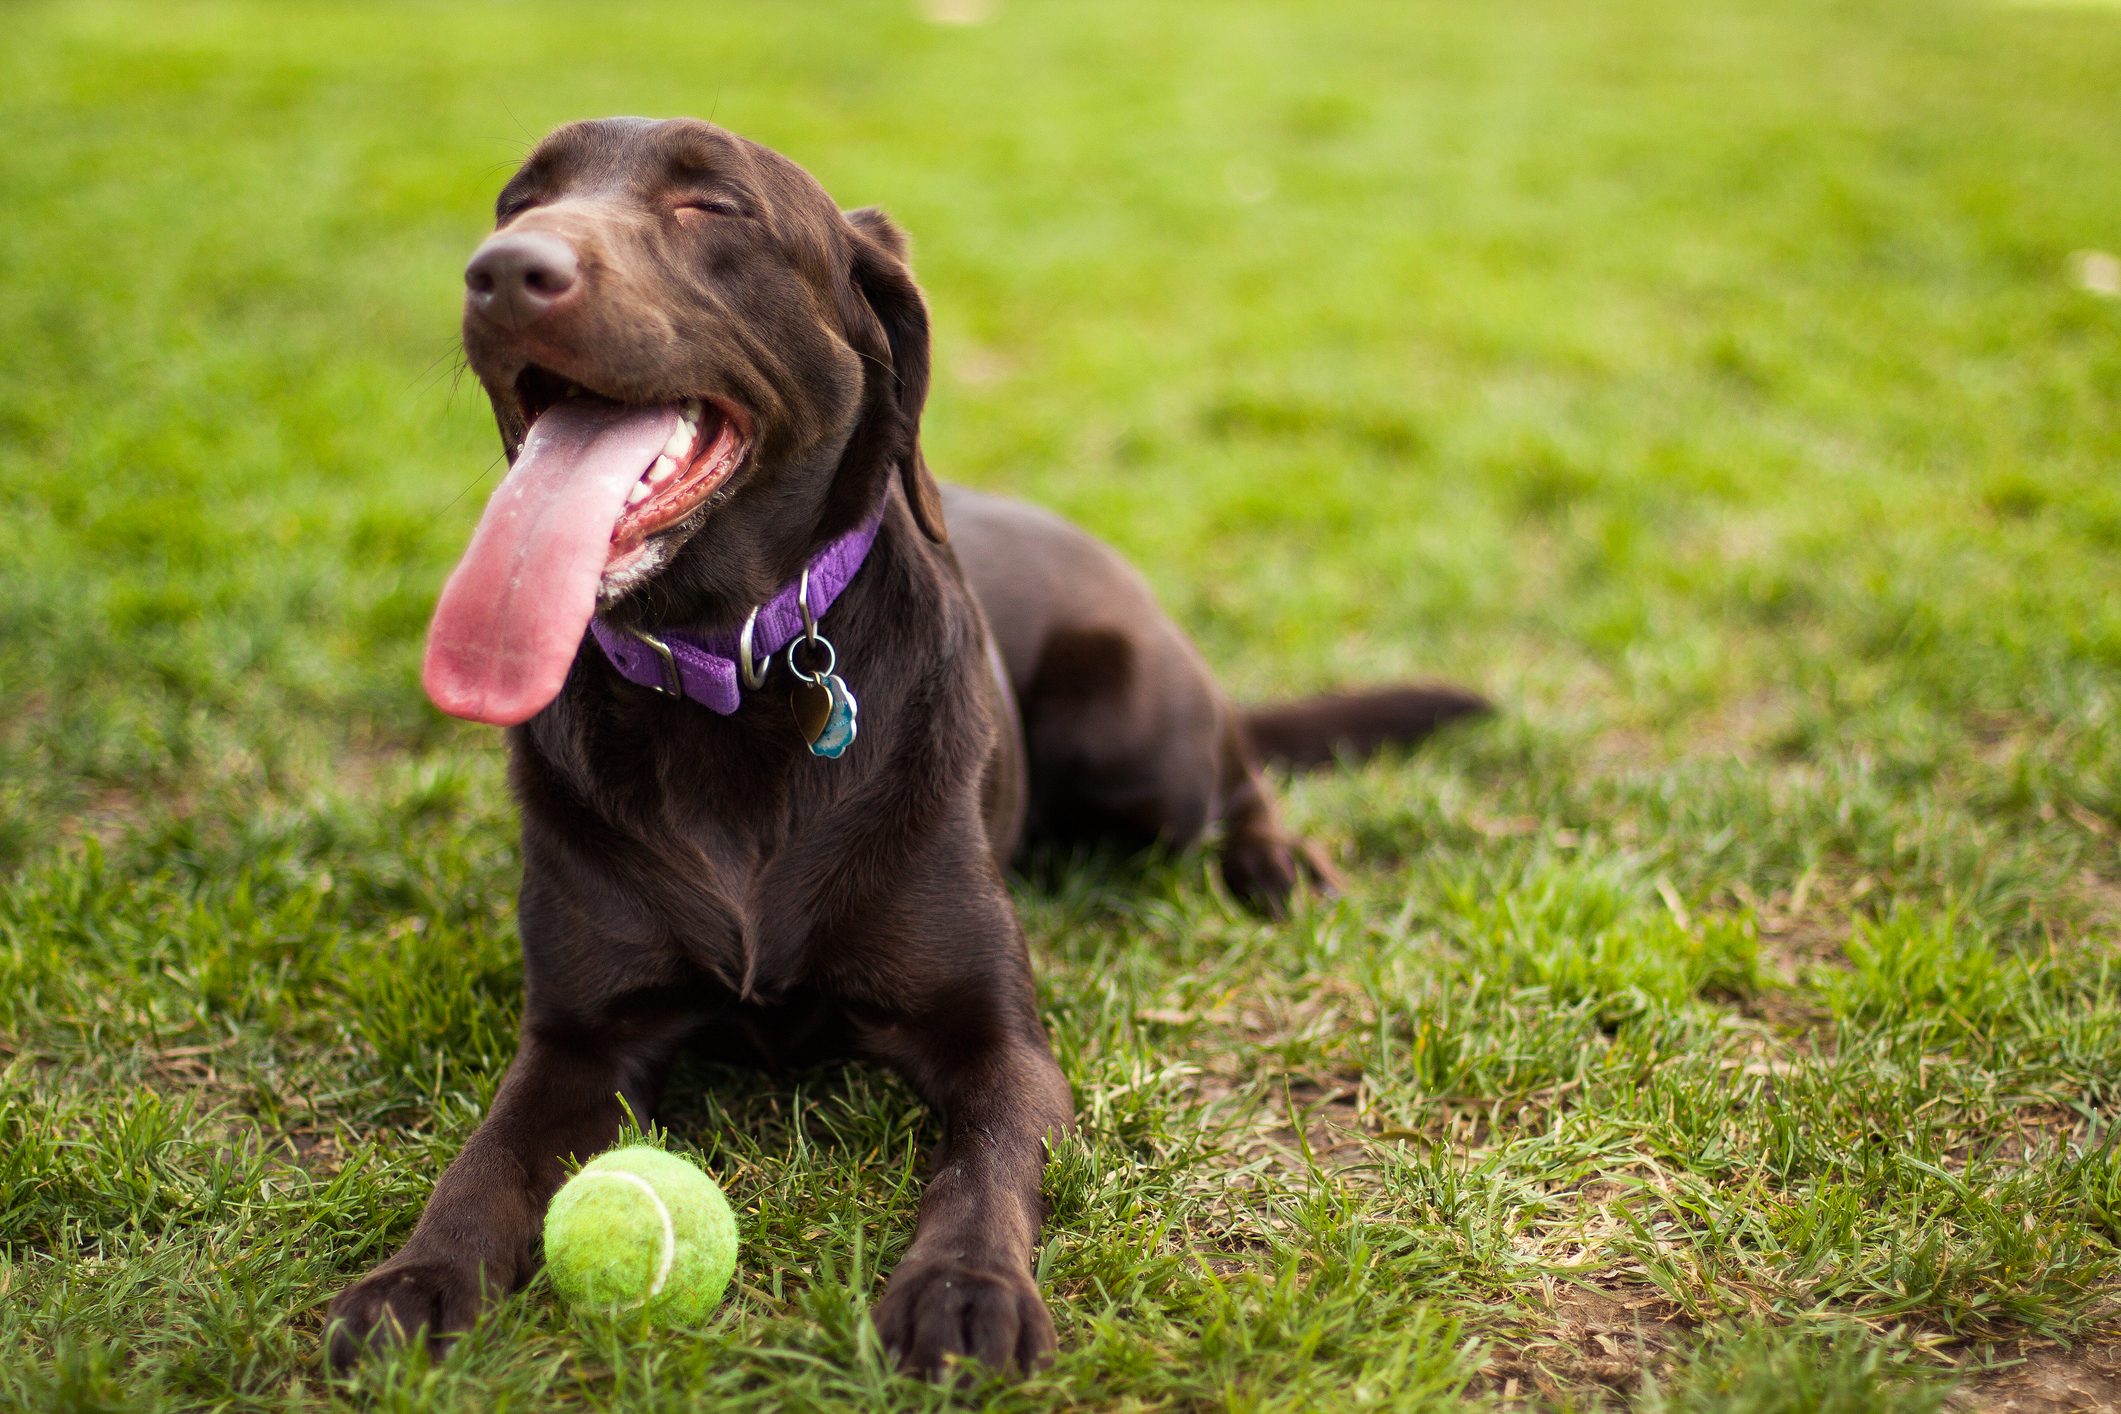 Chocolate labrador dog with tennis ball